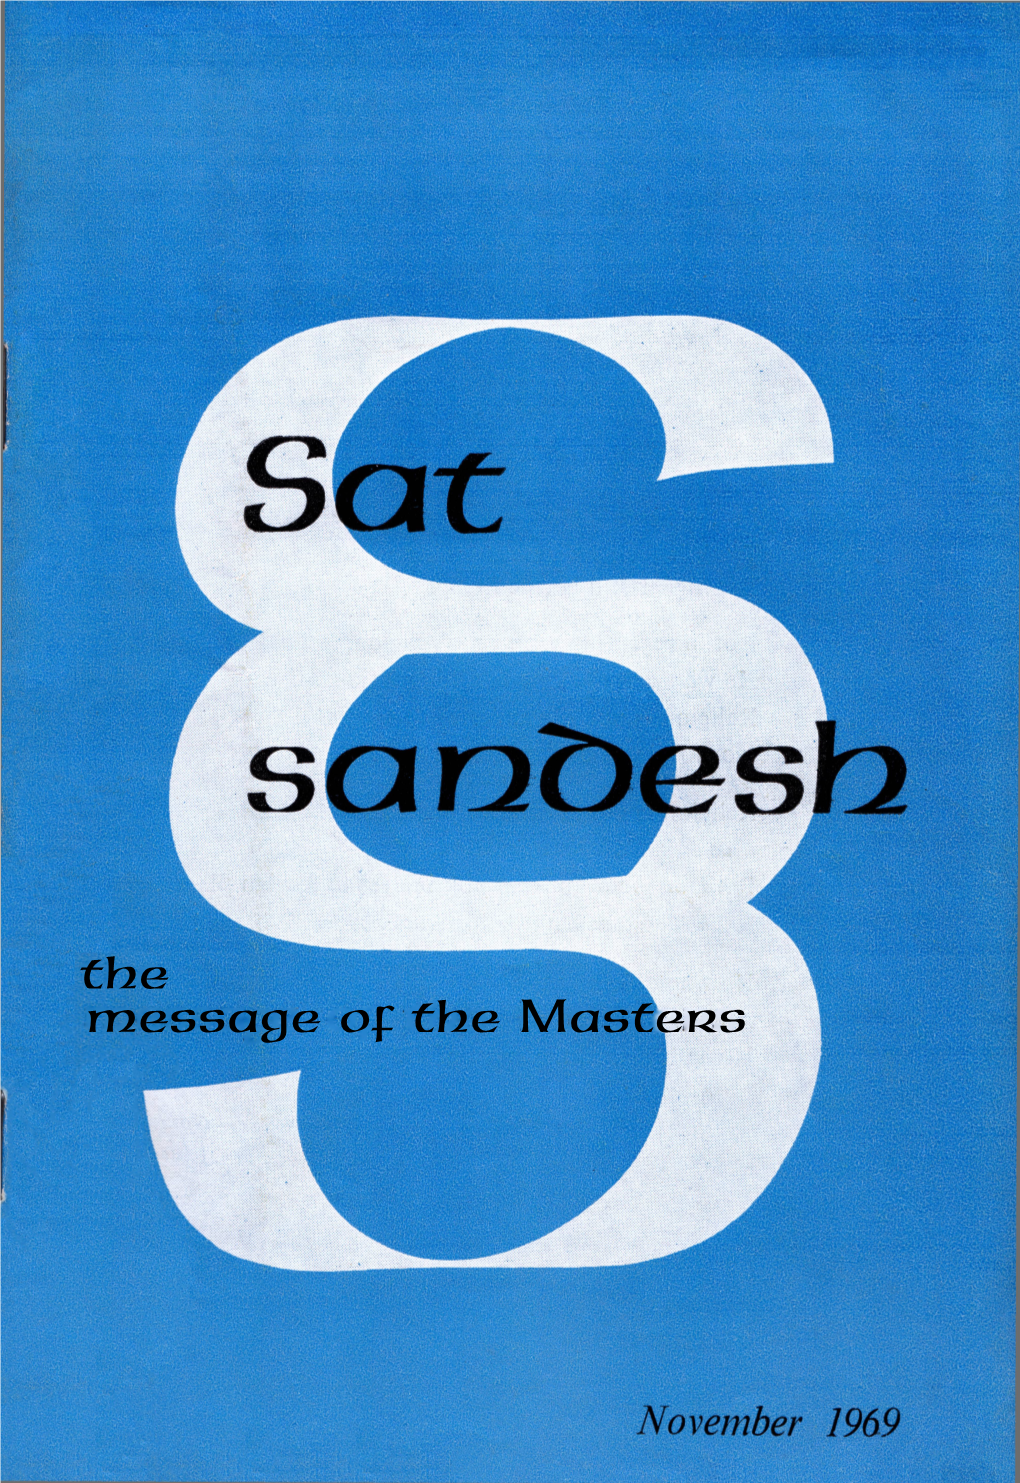 November 1969 Volume Two Number Ten